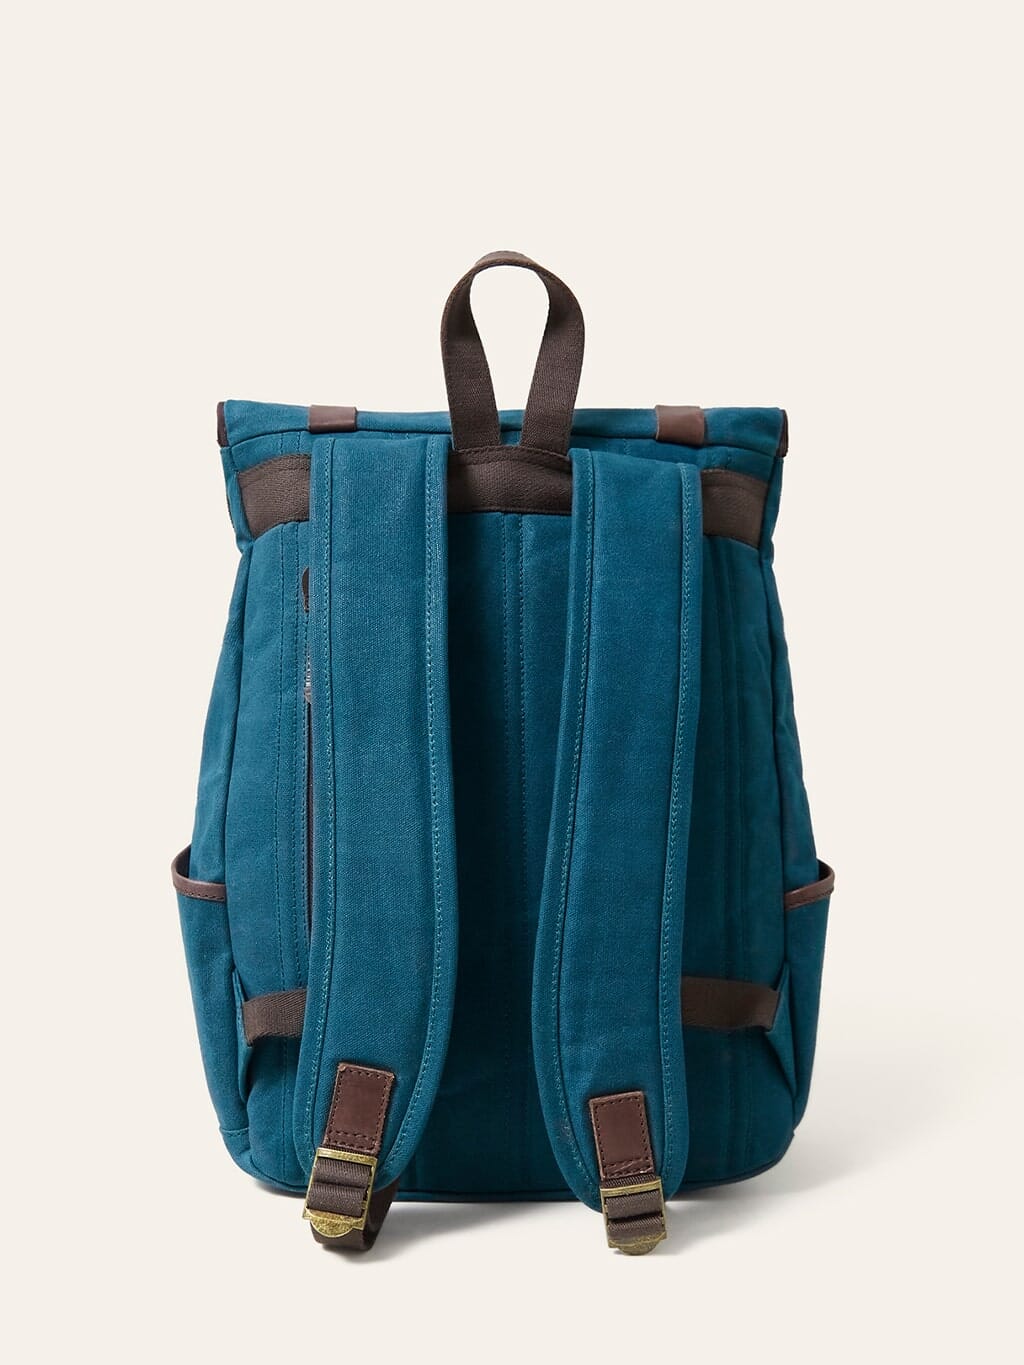 teal-waxed-cotton-bali-backpack-440788.jpg